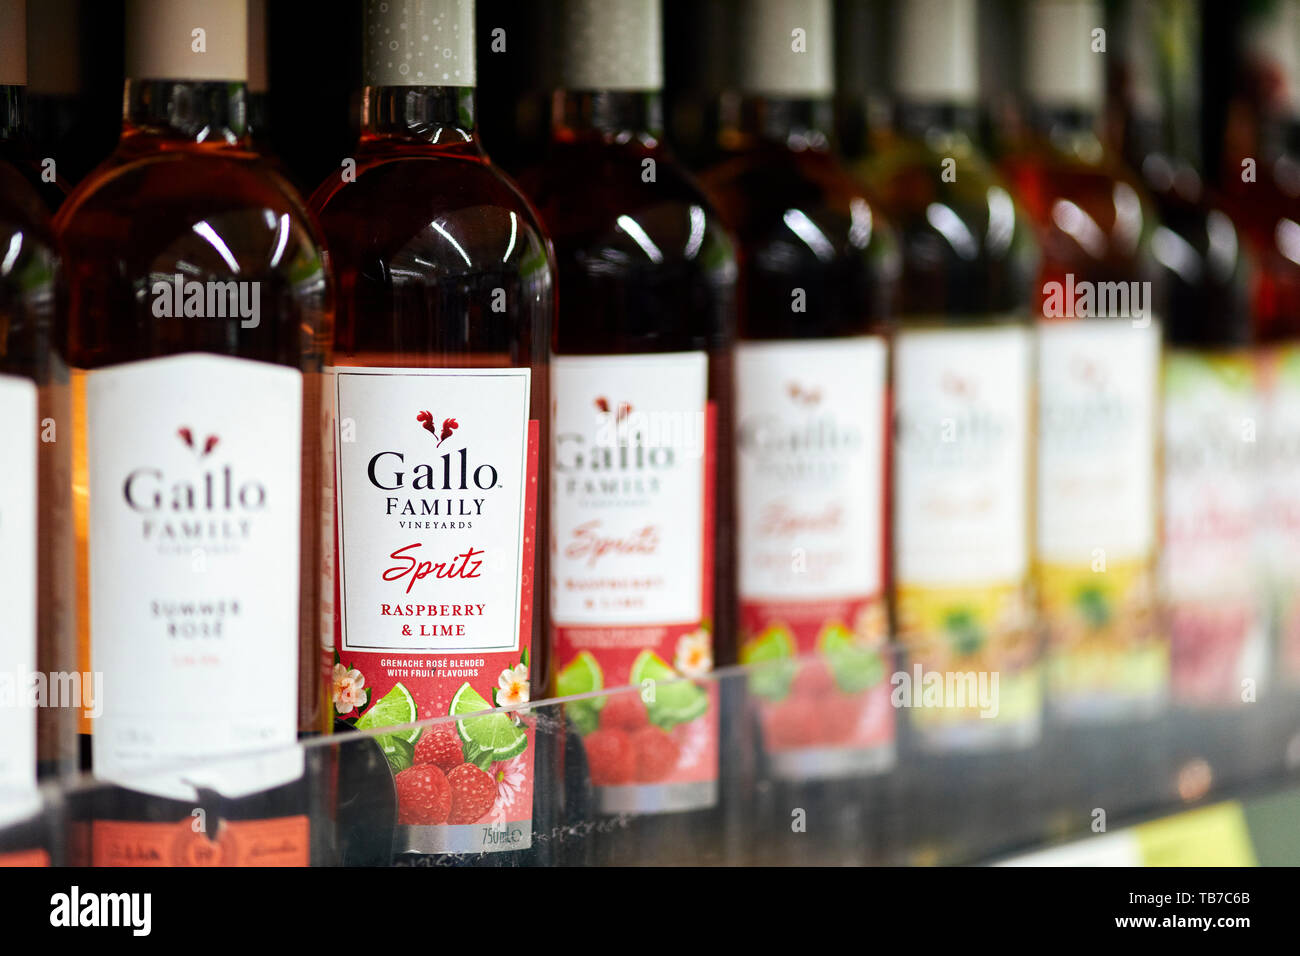 Bottles of Gallo wine on shelf Stock Photo